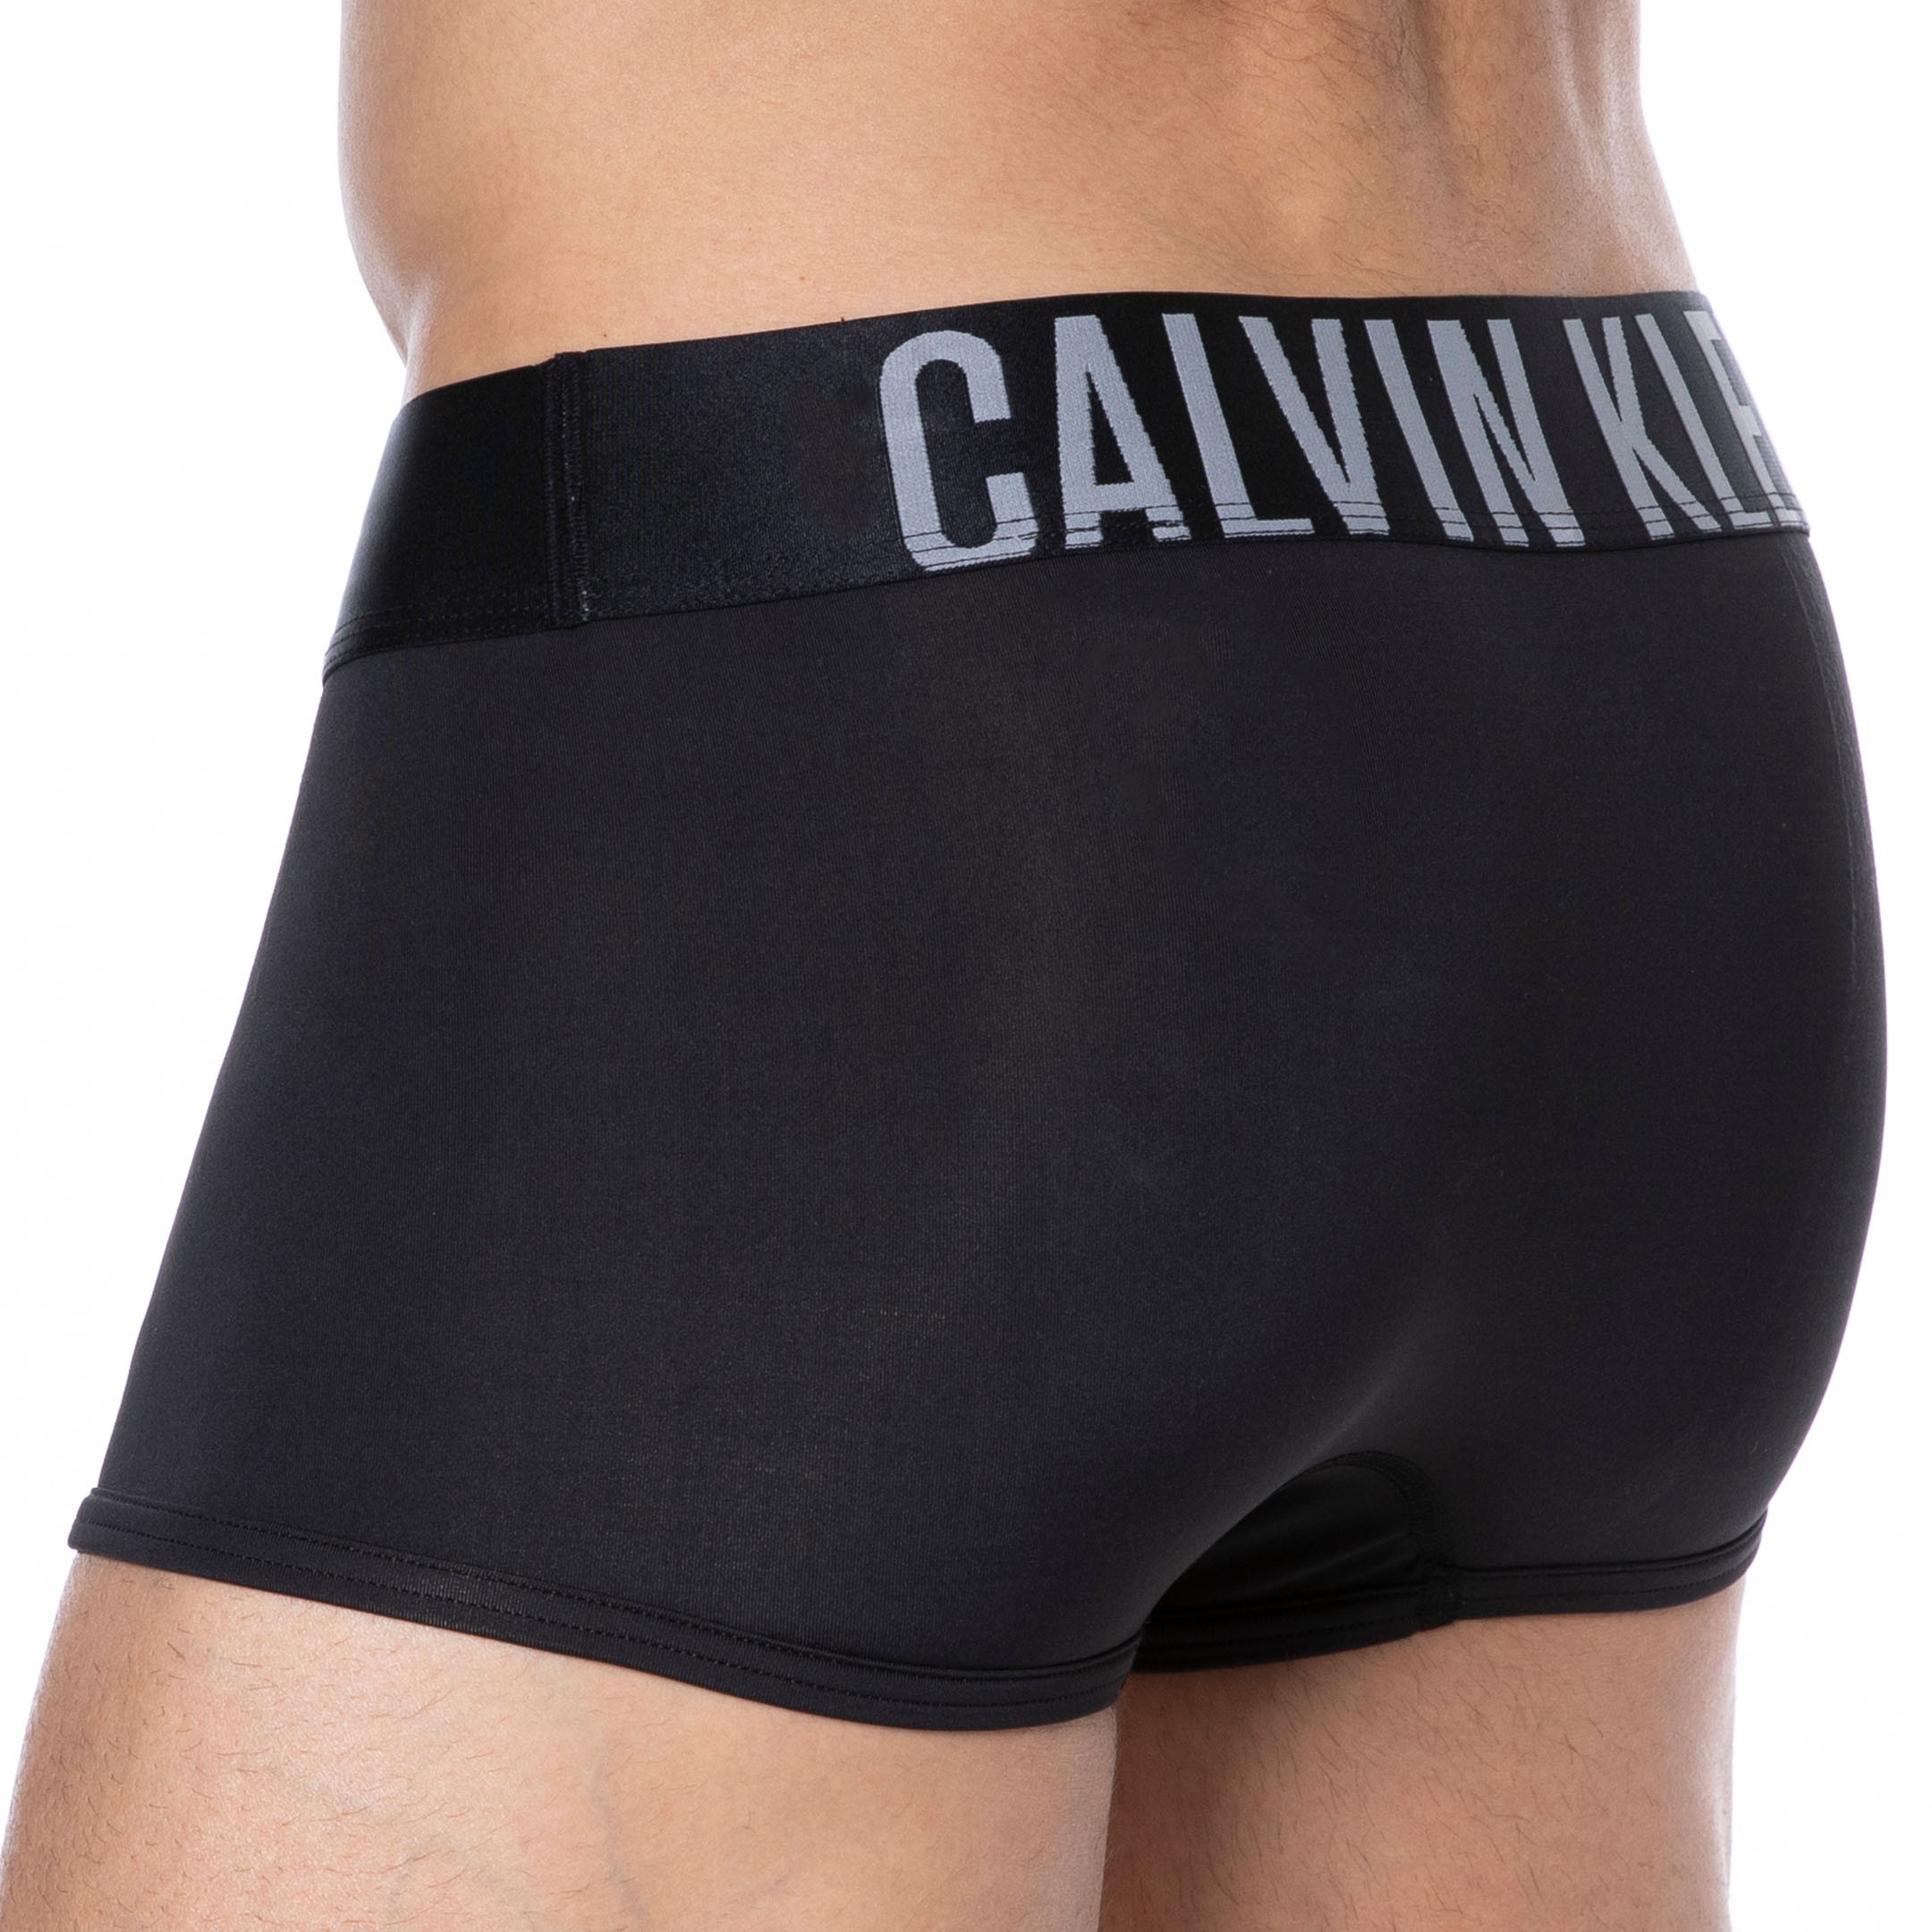 Calvin Klein Men's Intense Power Micro 3-Pack Boxer Brief - Black - XL